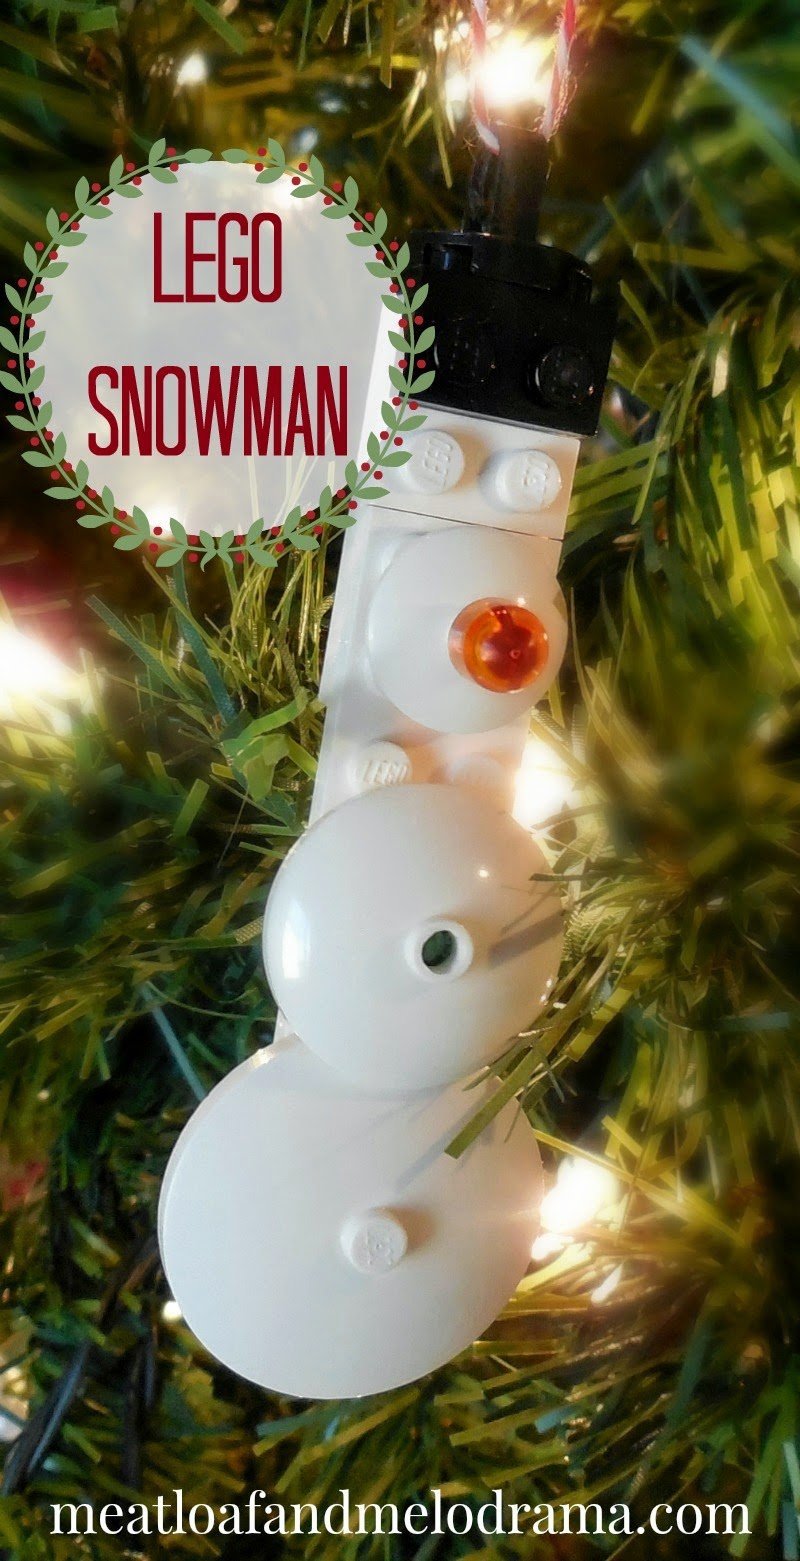 snowman ornament made from lego bricks